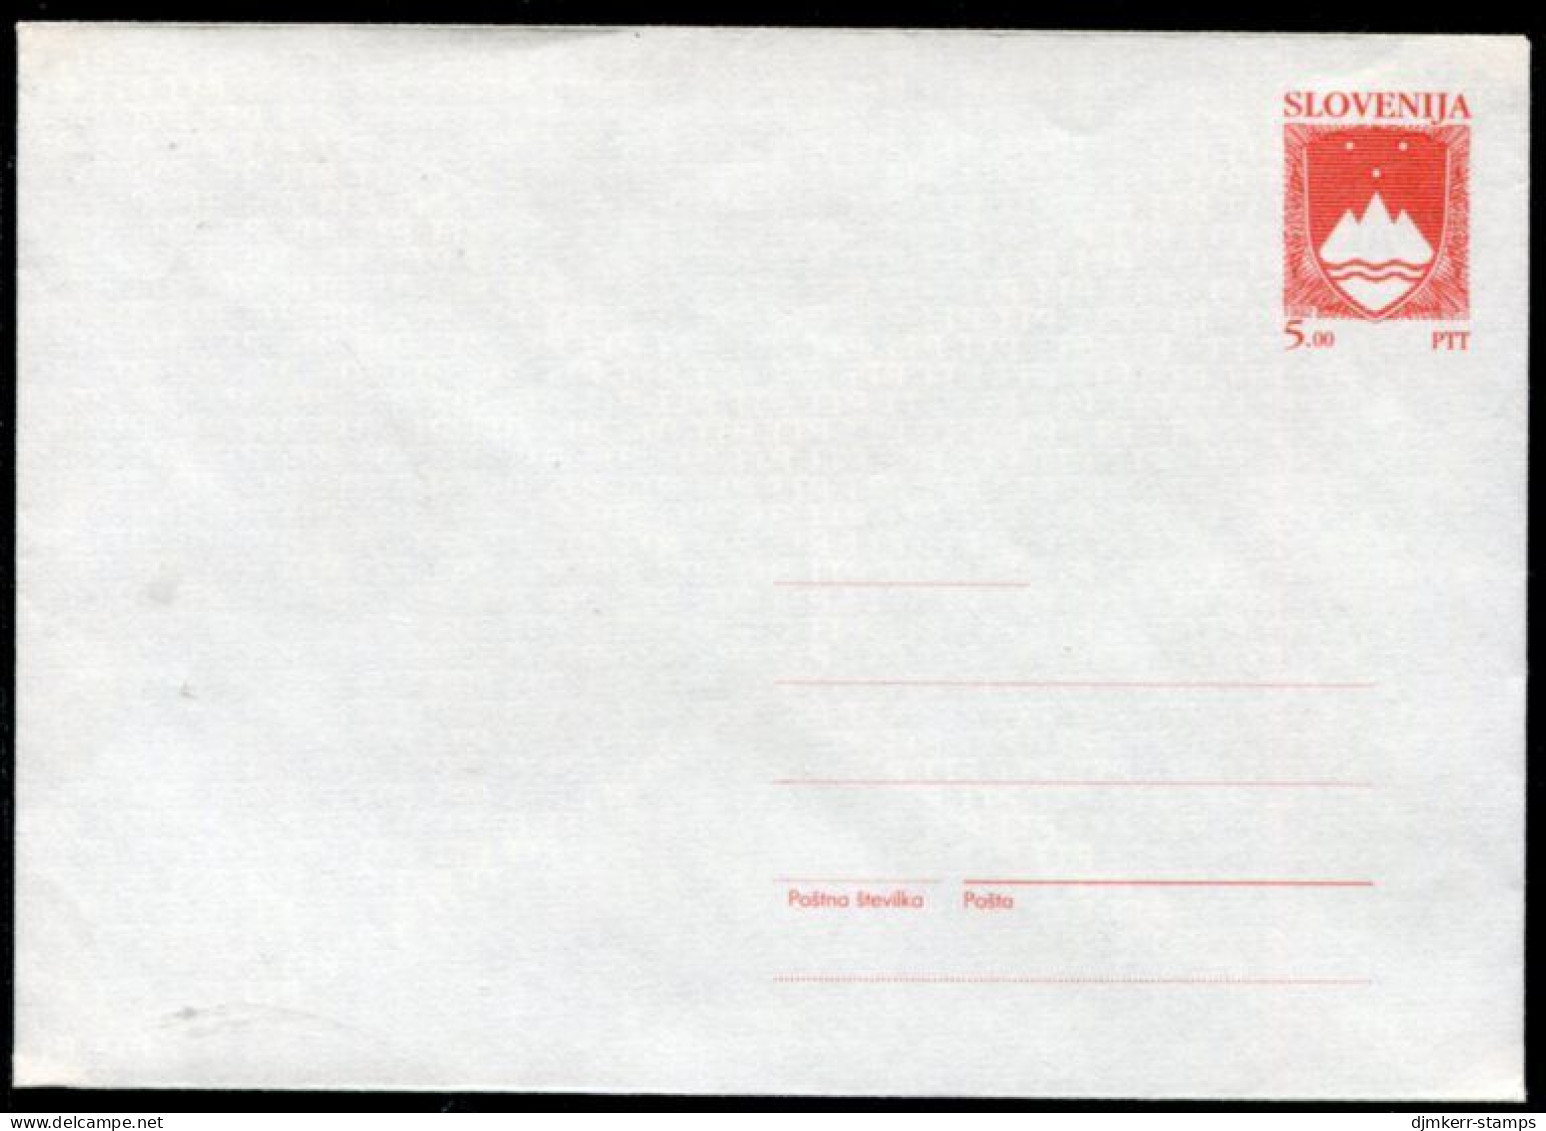 SLOVENIA 1992 5.00 T.  Postal Stationery Envelope On White Paper, Unused.  Michel U1a - Slovenia